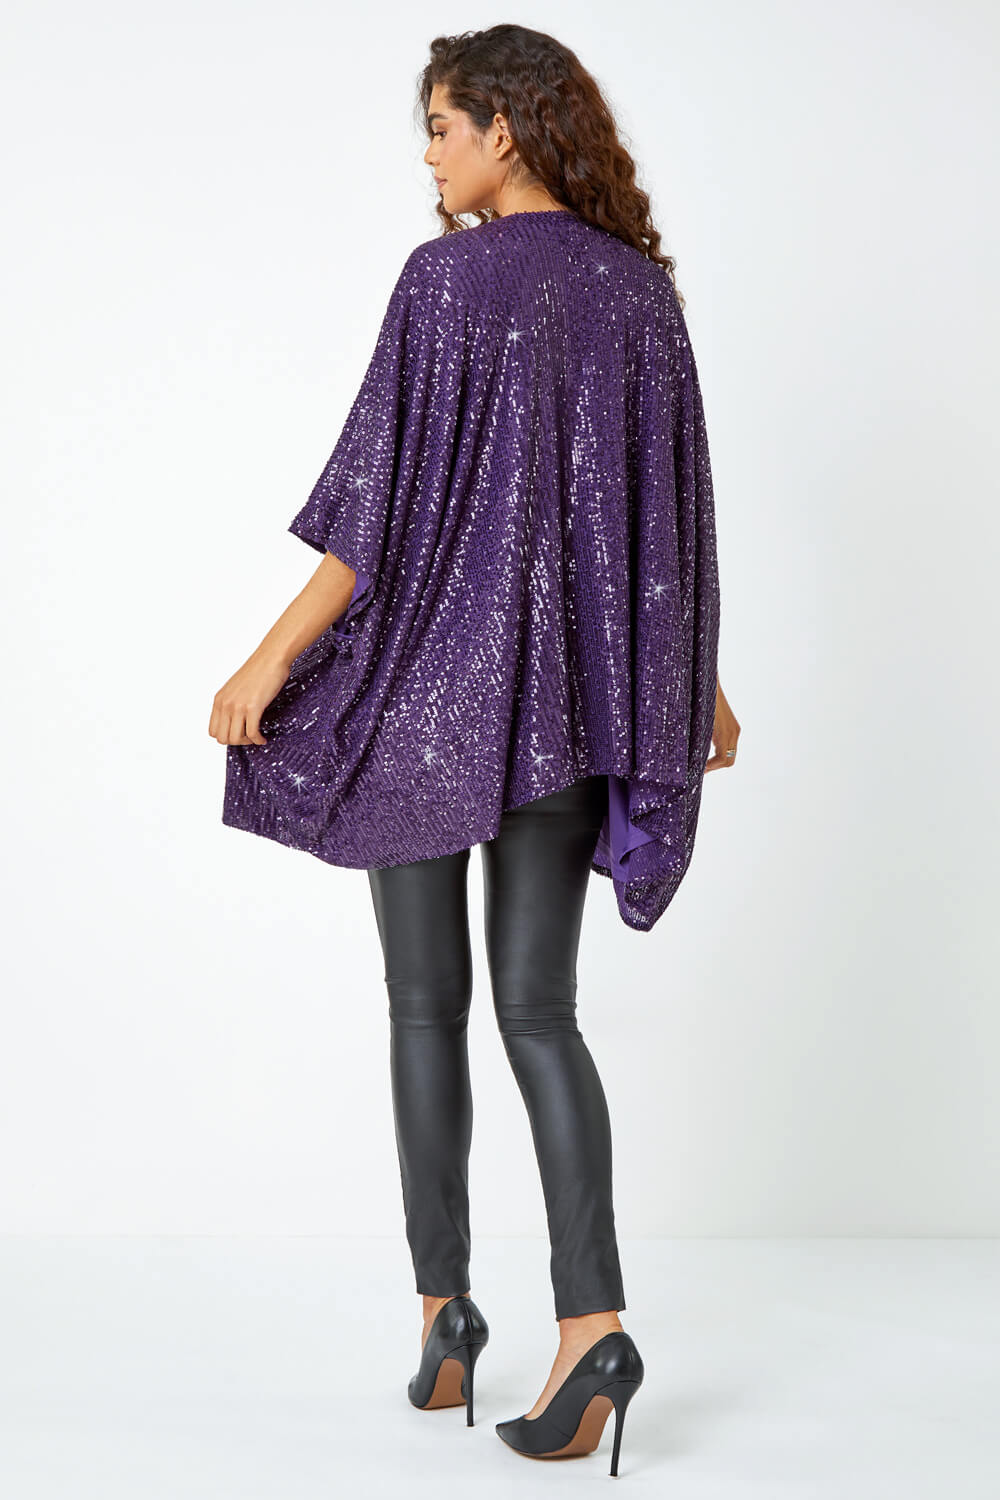 Purple One Size Embellished Sequin Cape Jacket, Image 3 of 5